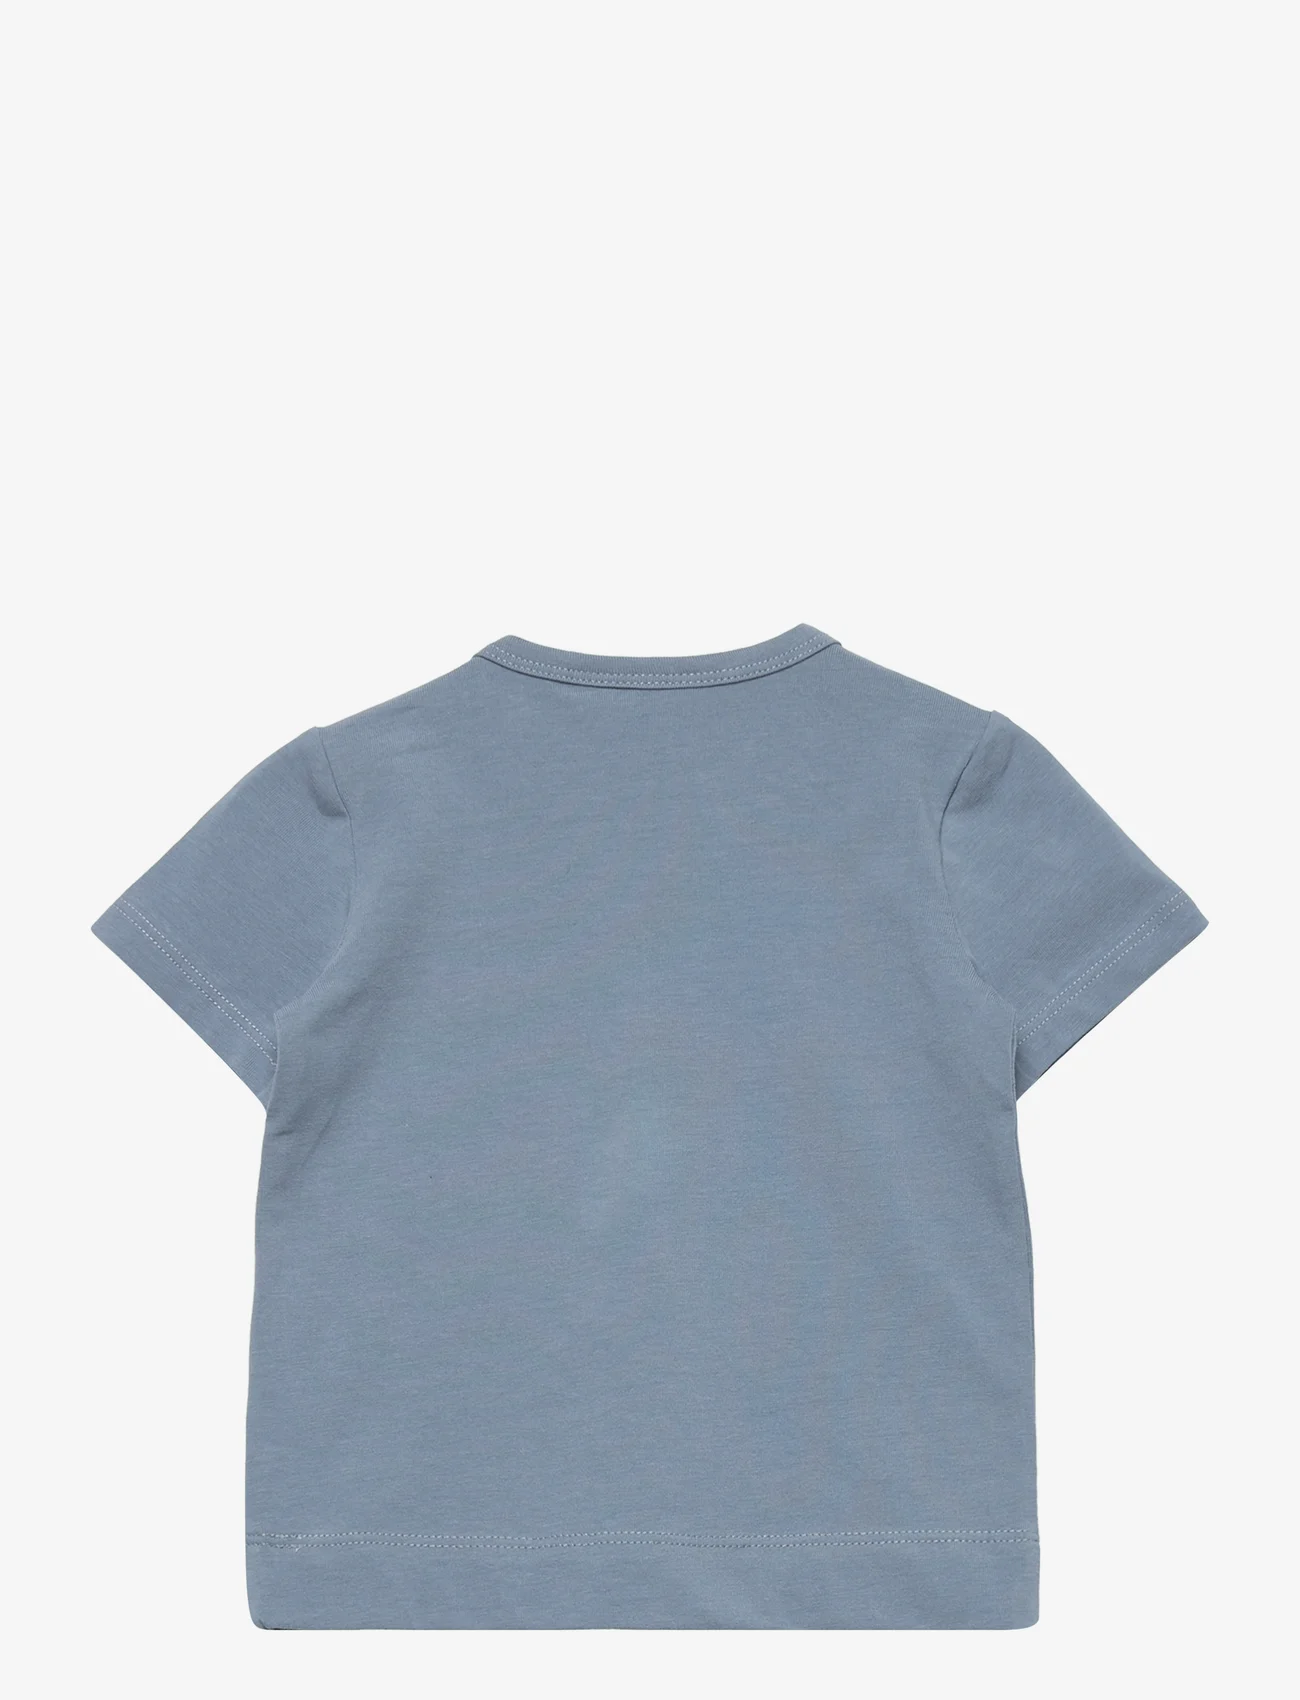 Hummel - hmlMADS T-SHIRT S/S - kortärmade t-shirts - blue mirage - 1